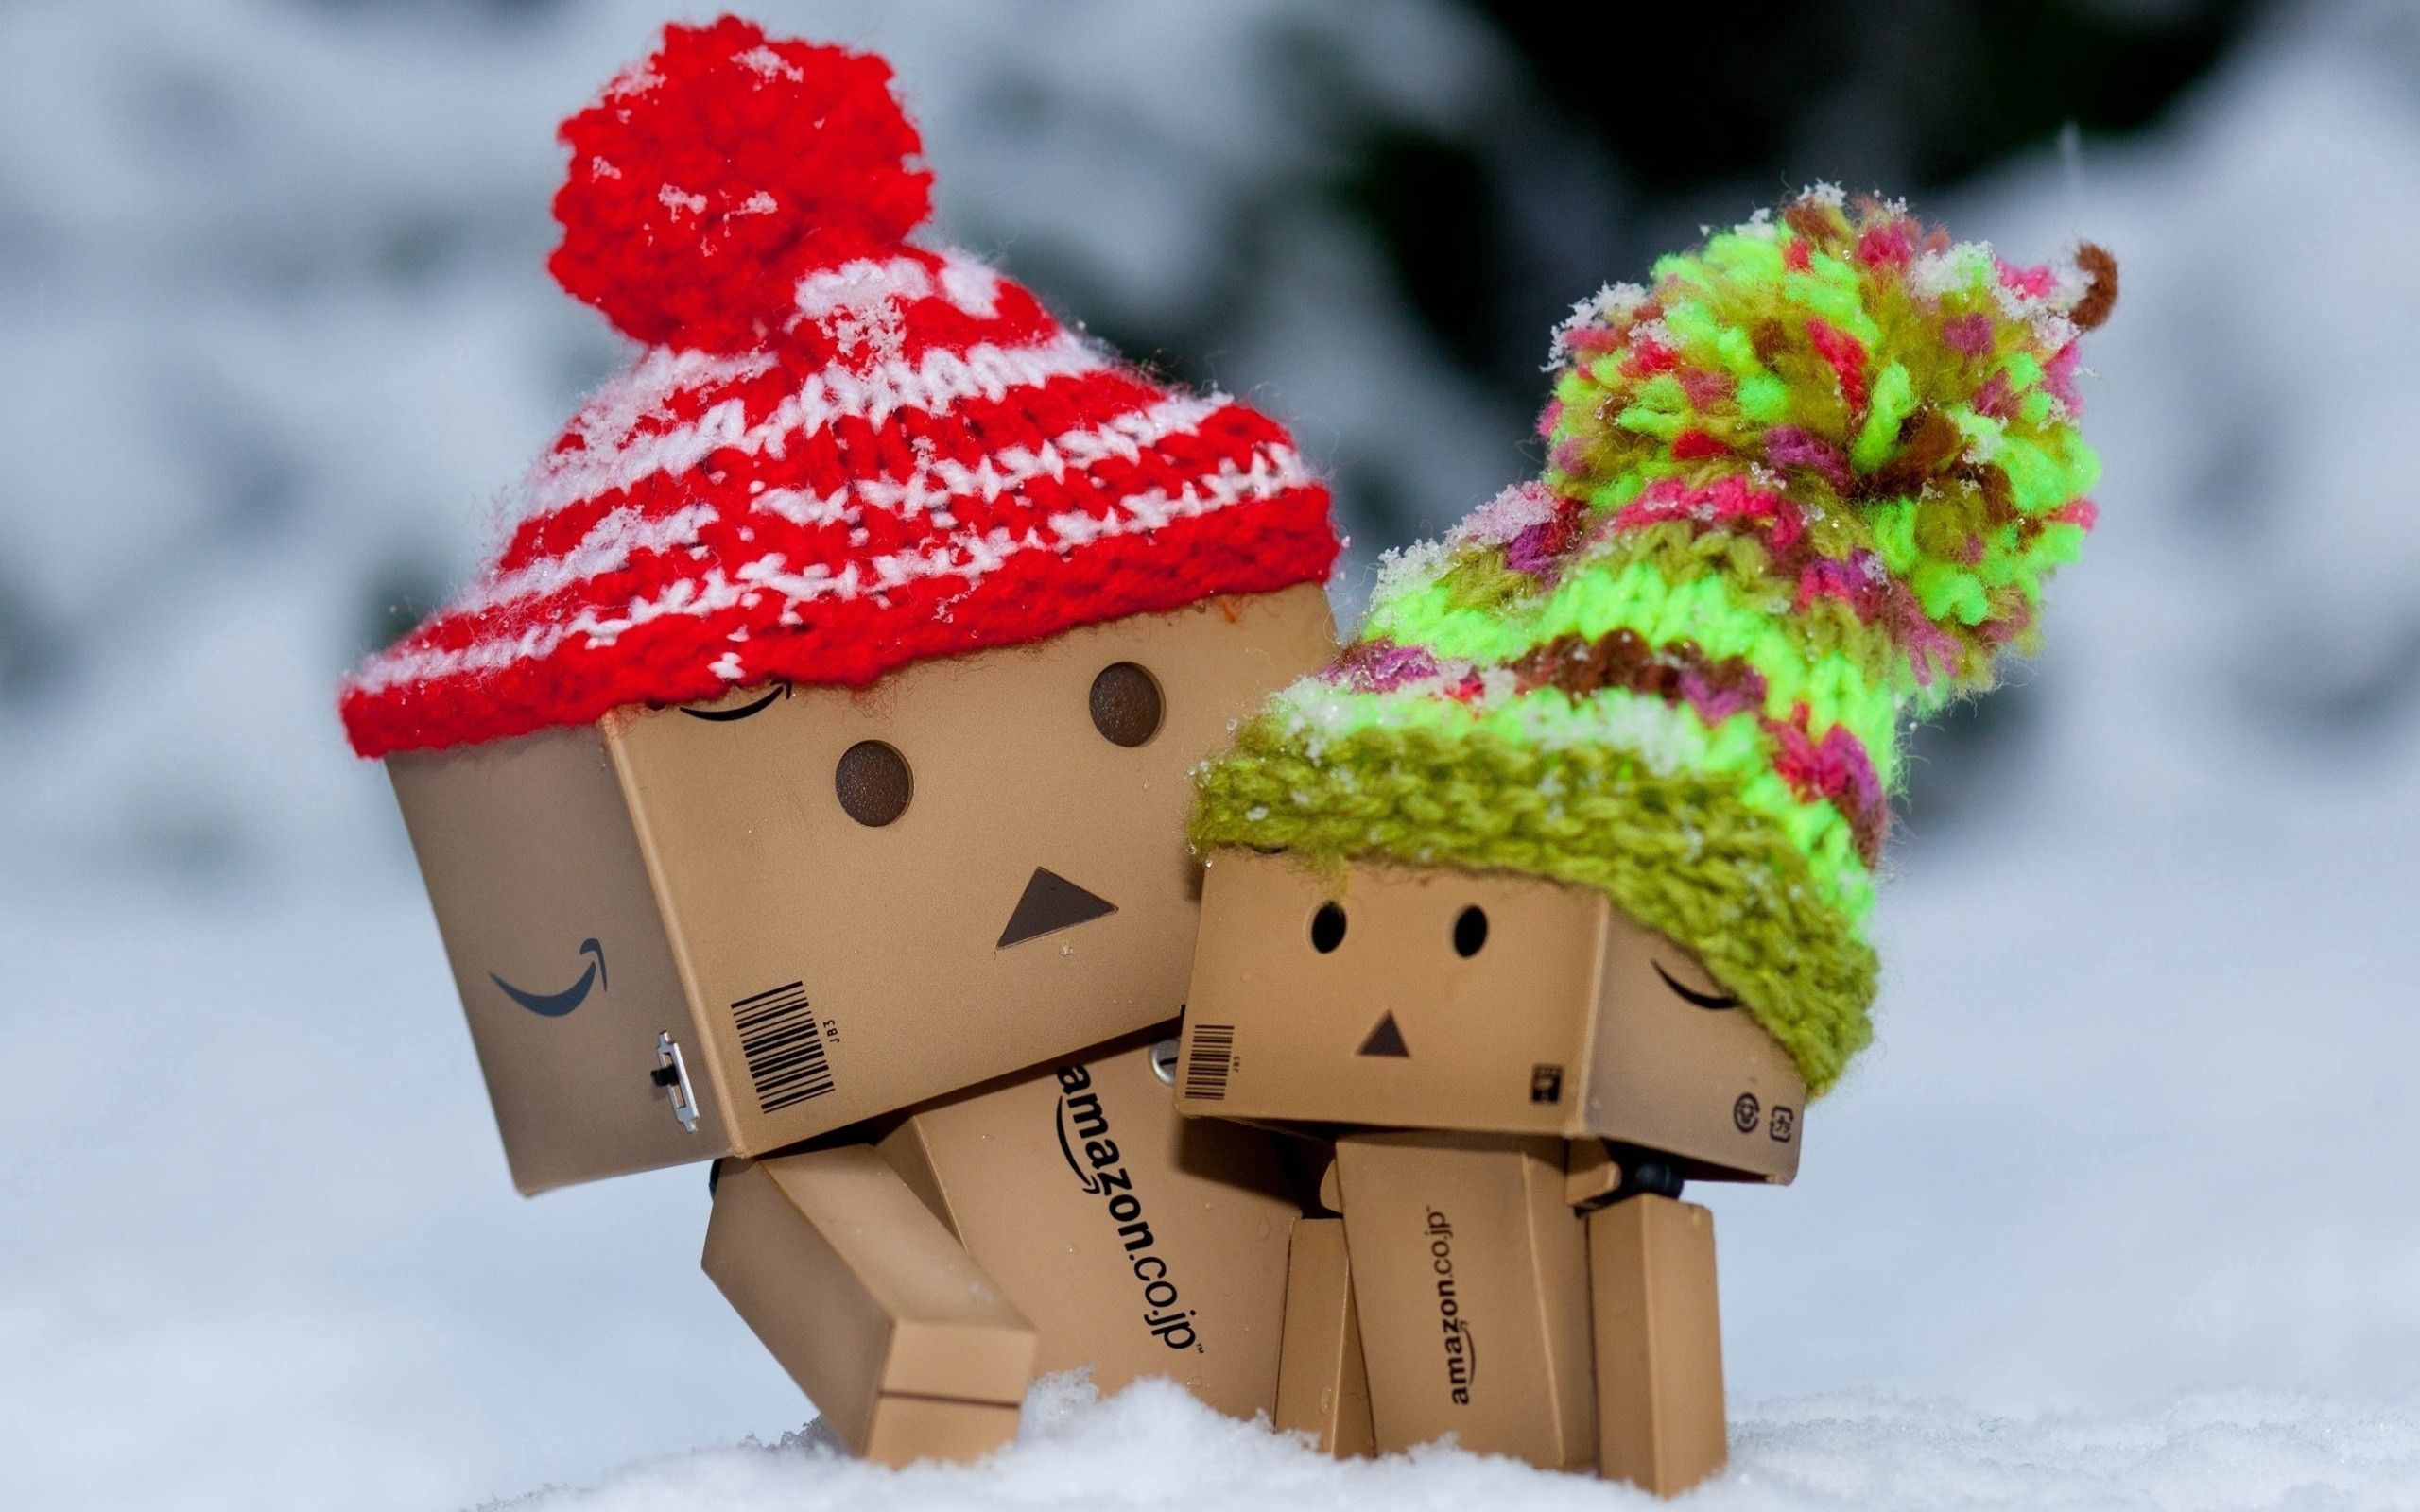 snow, miscellanea, miscellaneous, hats, caps, danboard, cardboard robots UHD